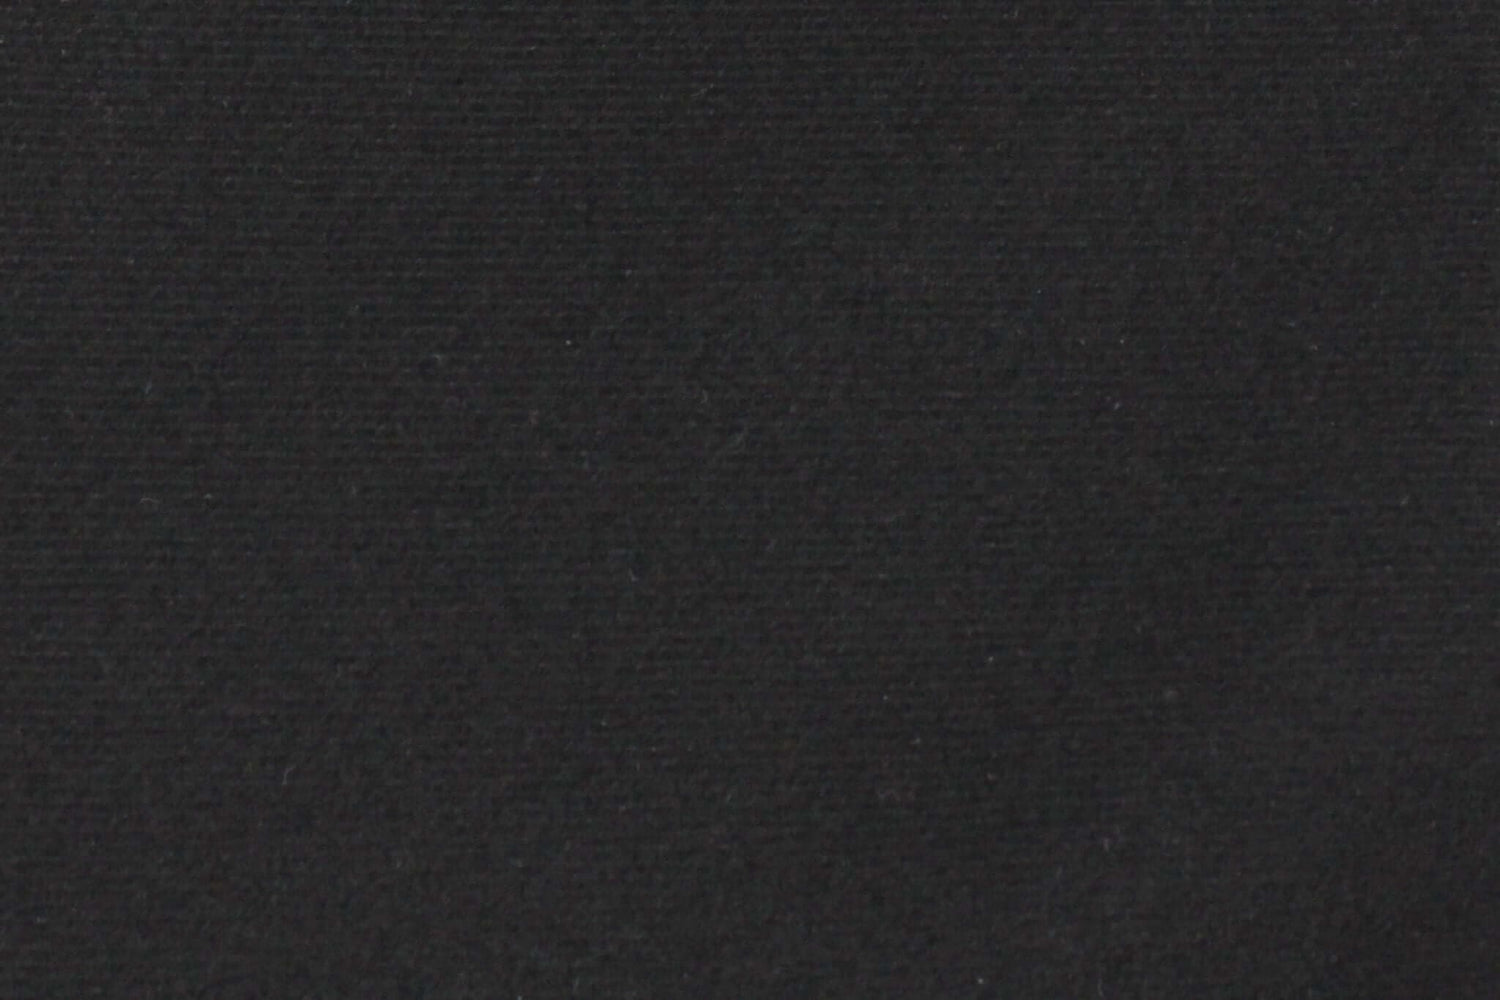 Black solid silk fabric zoom detail shot